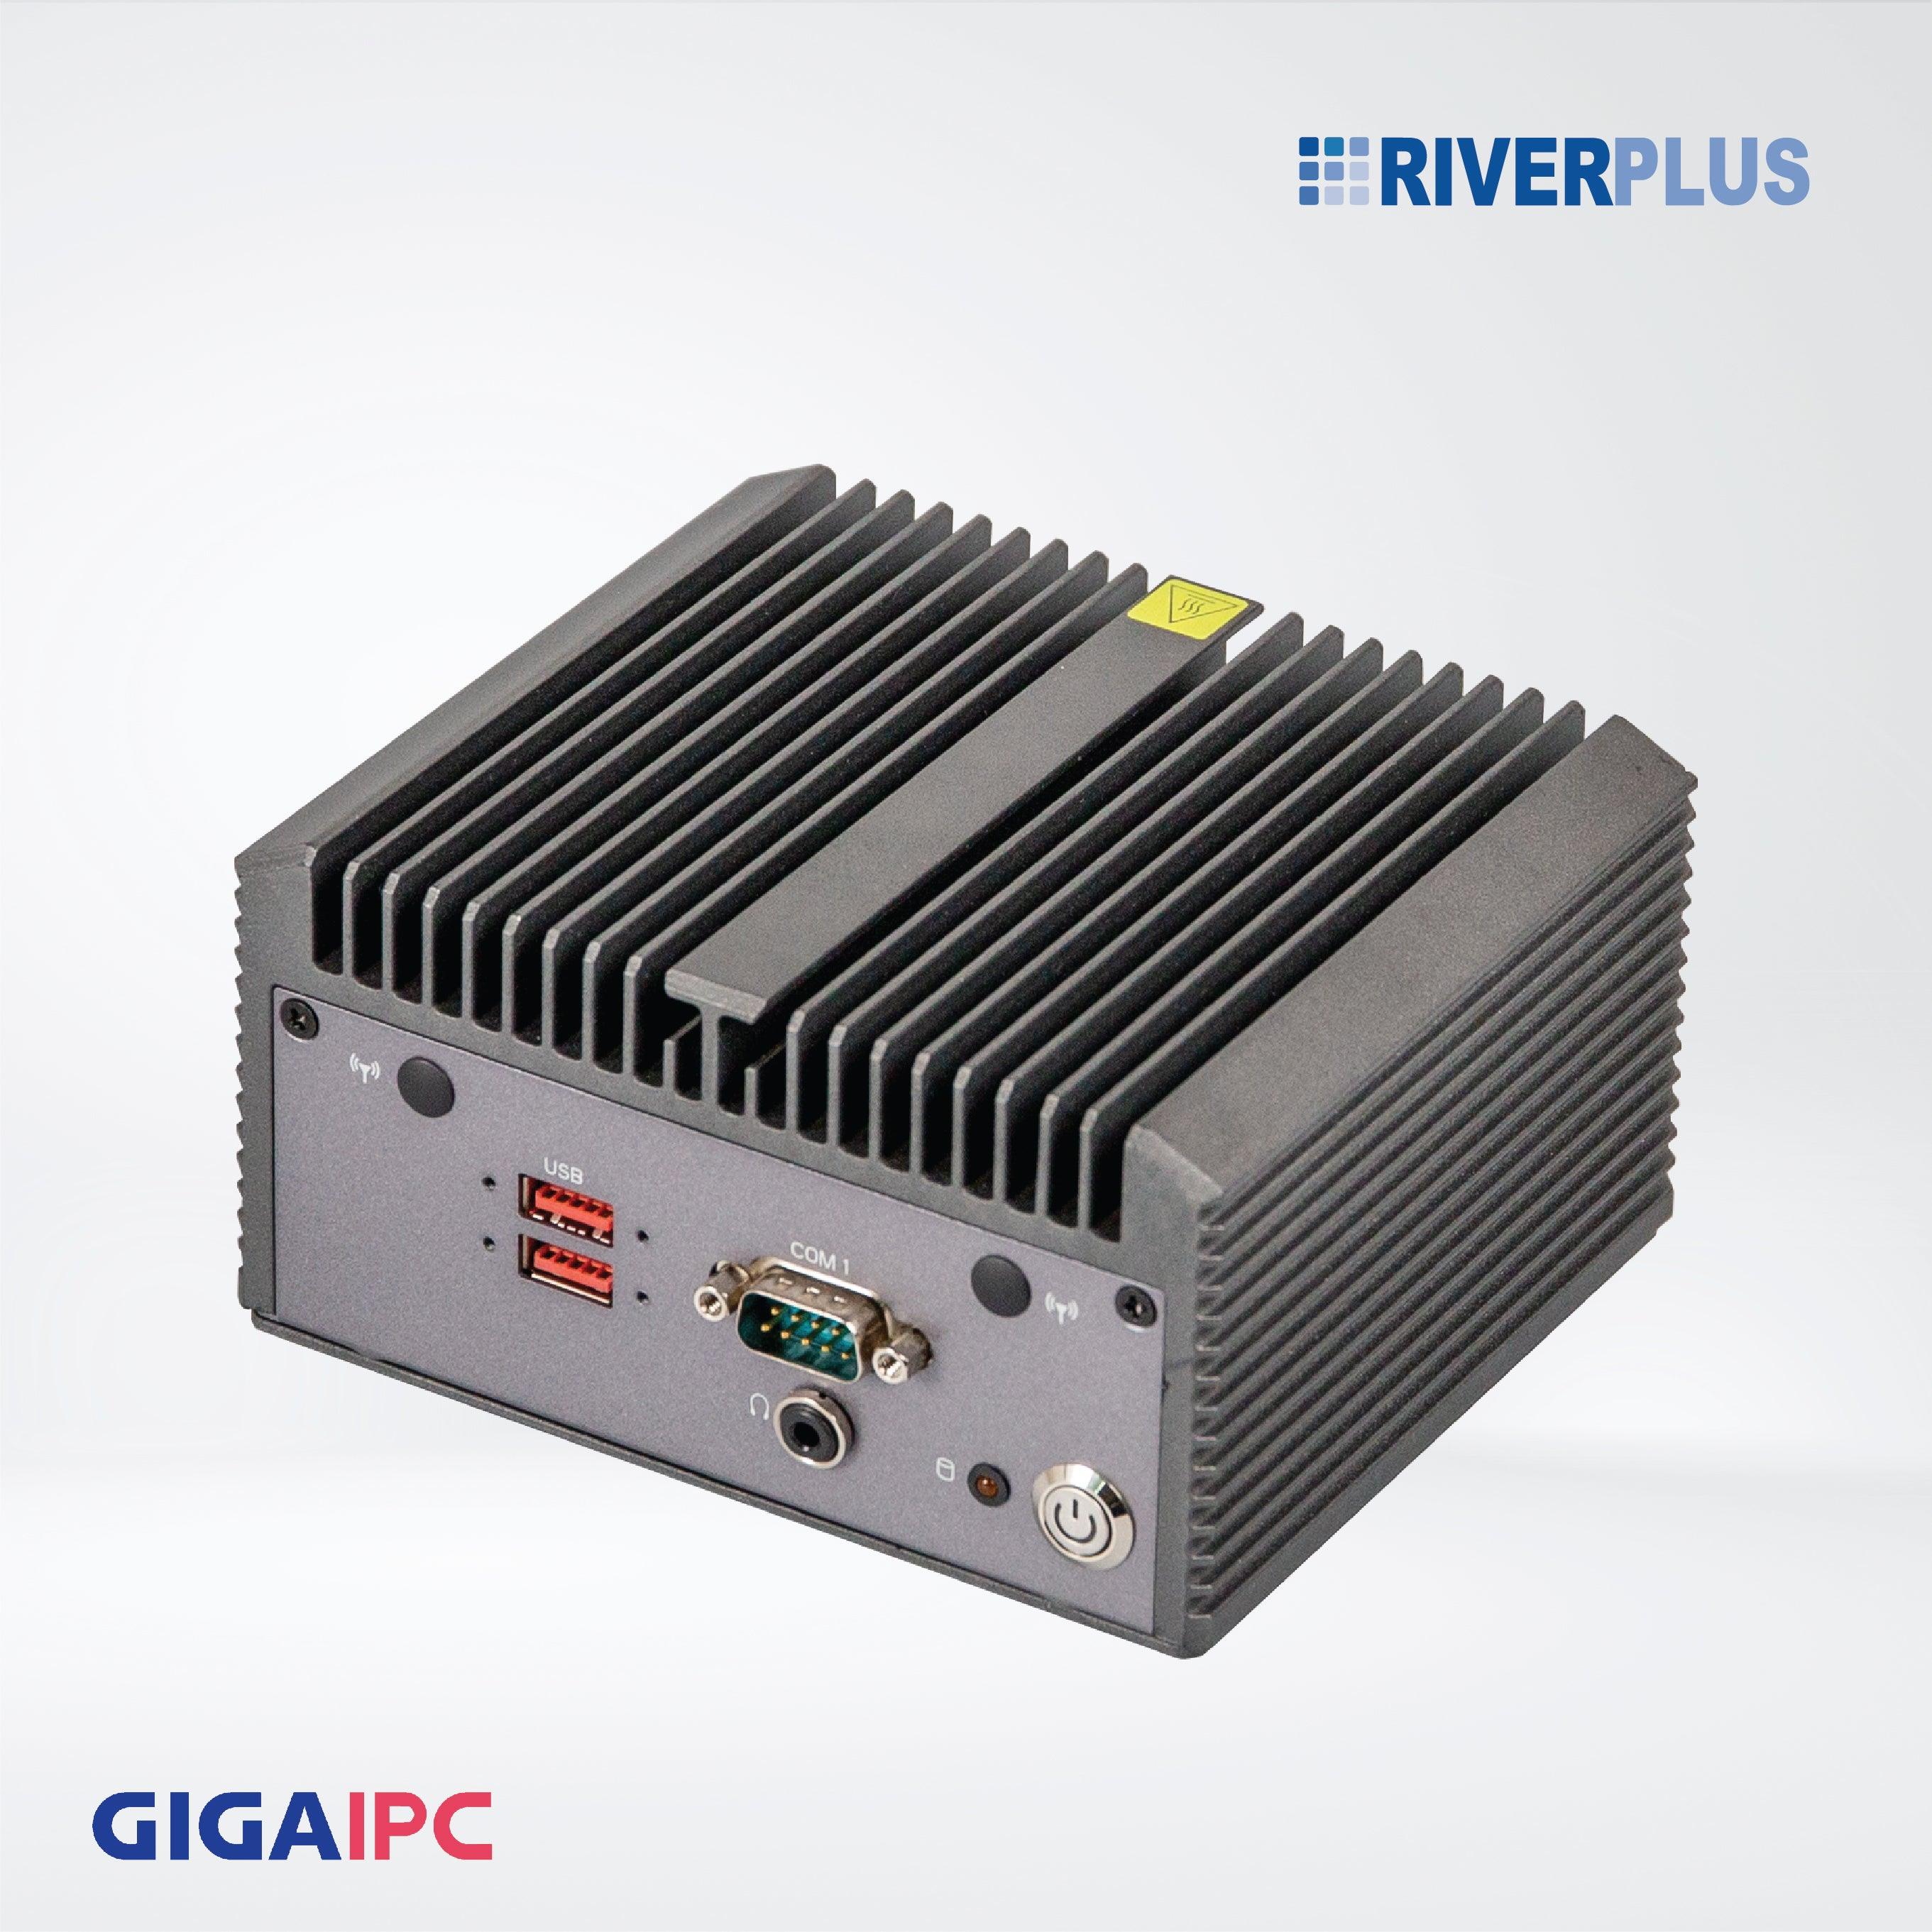 QBiX-TGLA1135G7-A1 Industrial system with Intel® Core™ i5-1135G7 Processor - Riverplus